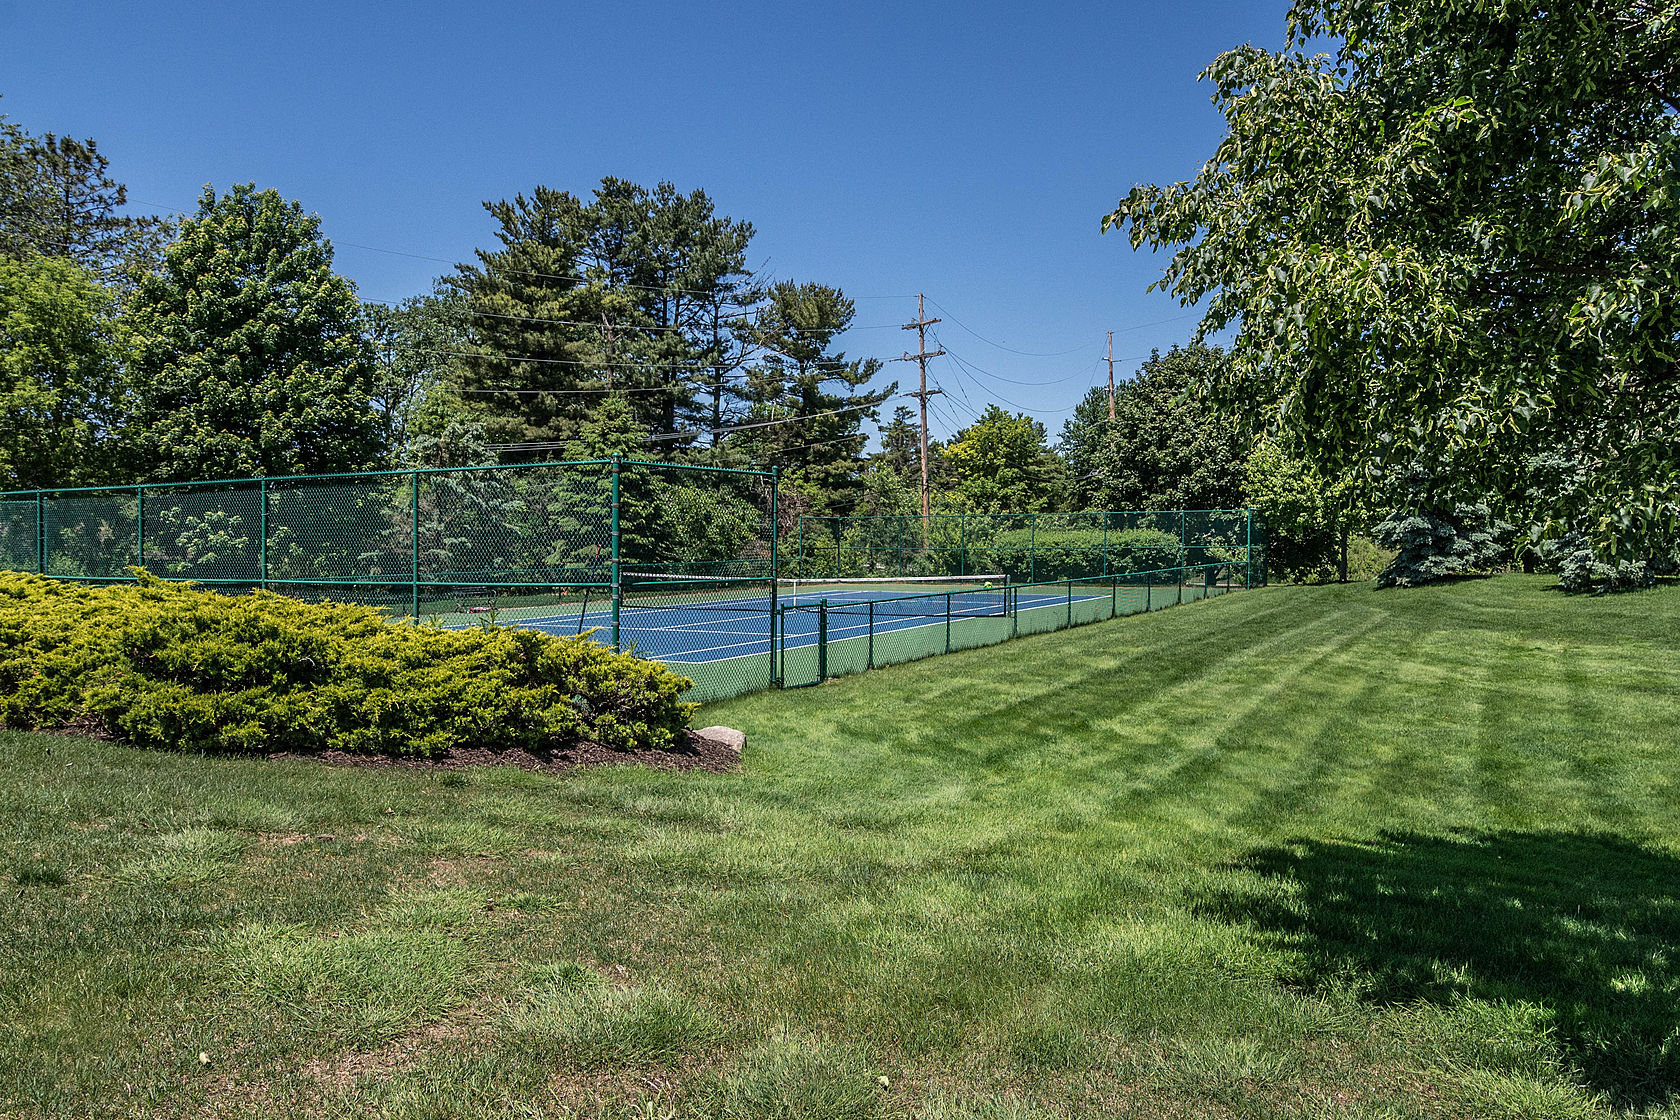 Tennis court in Pine Creek